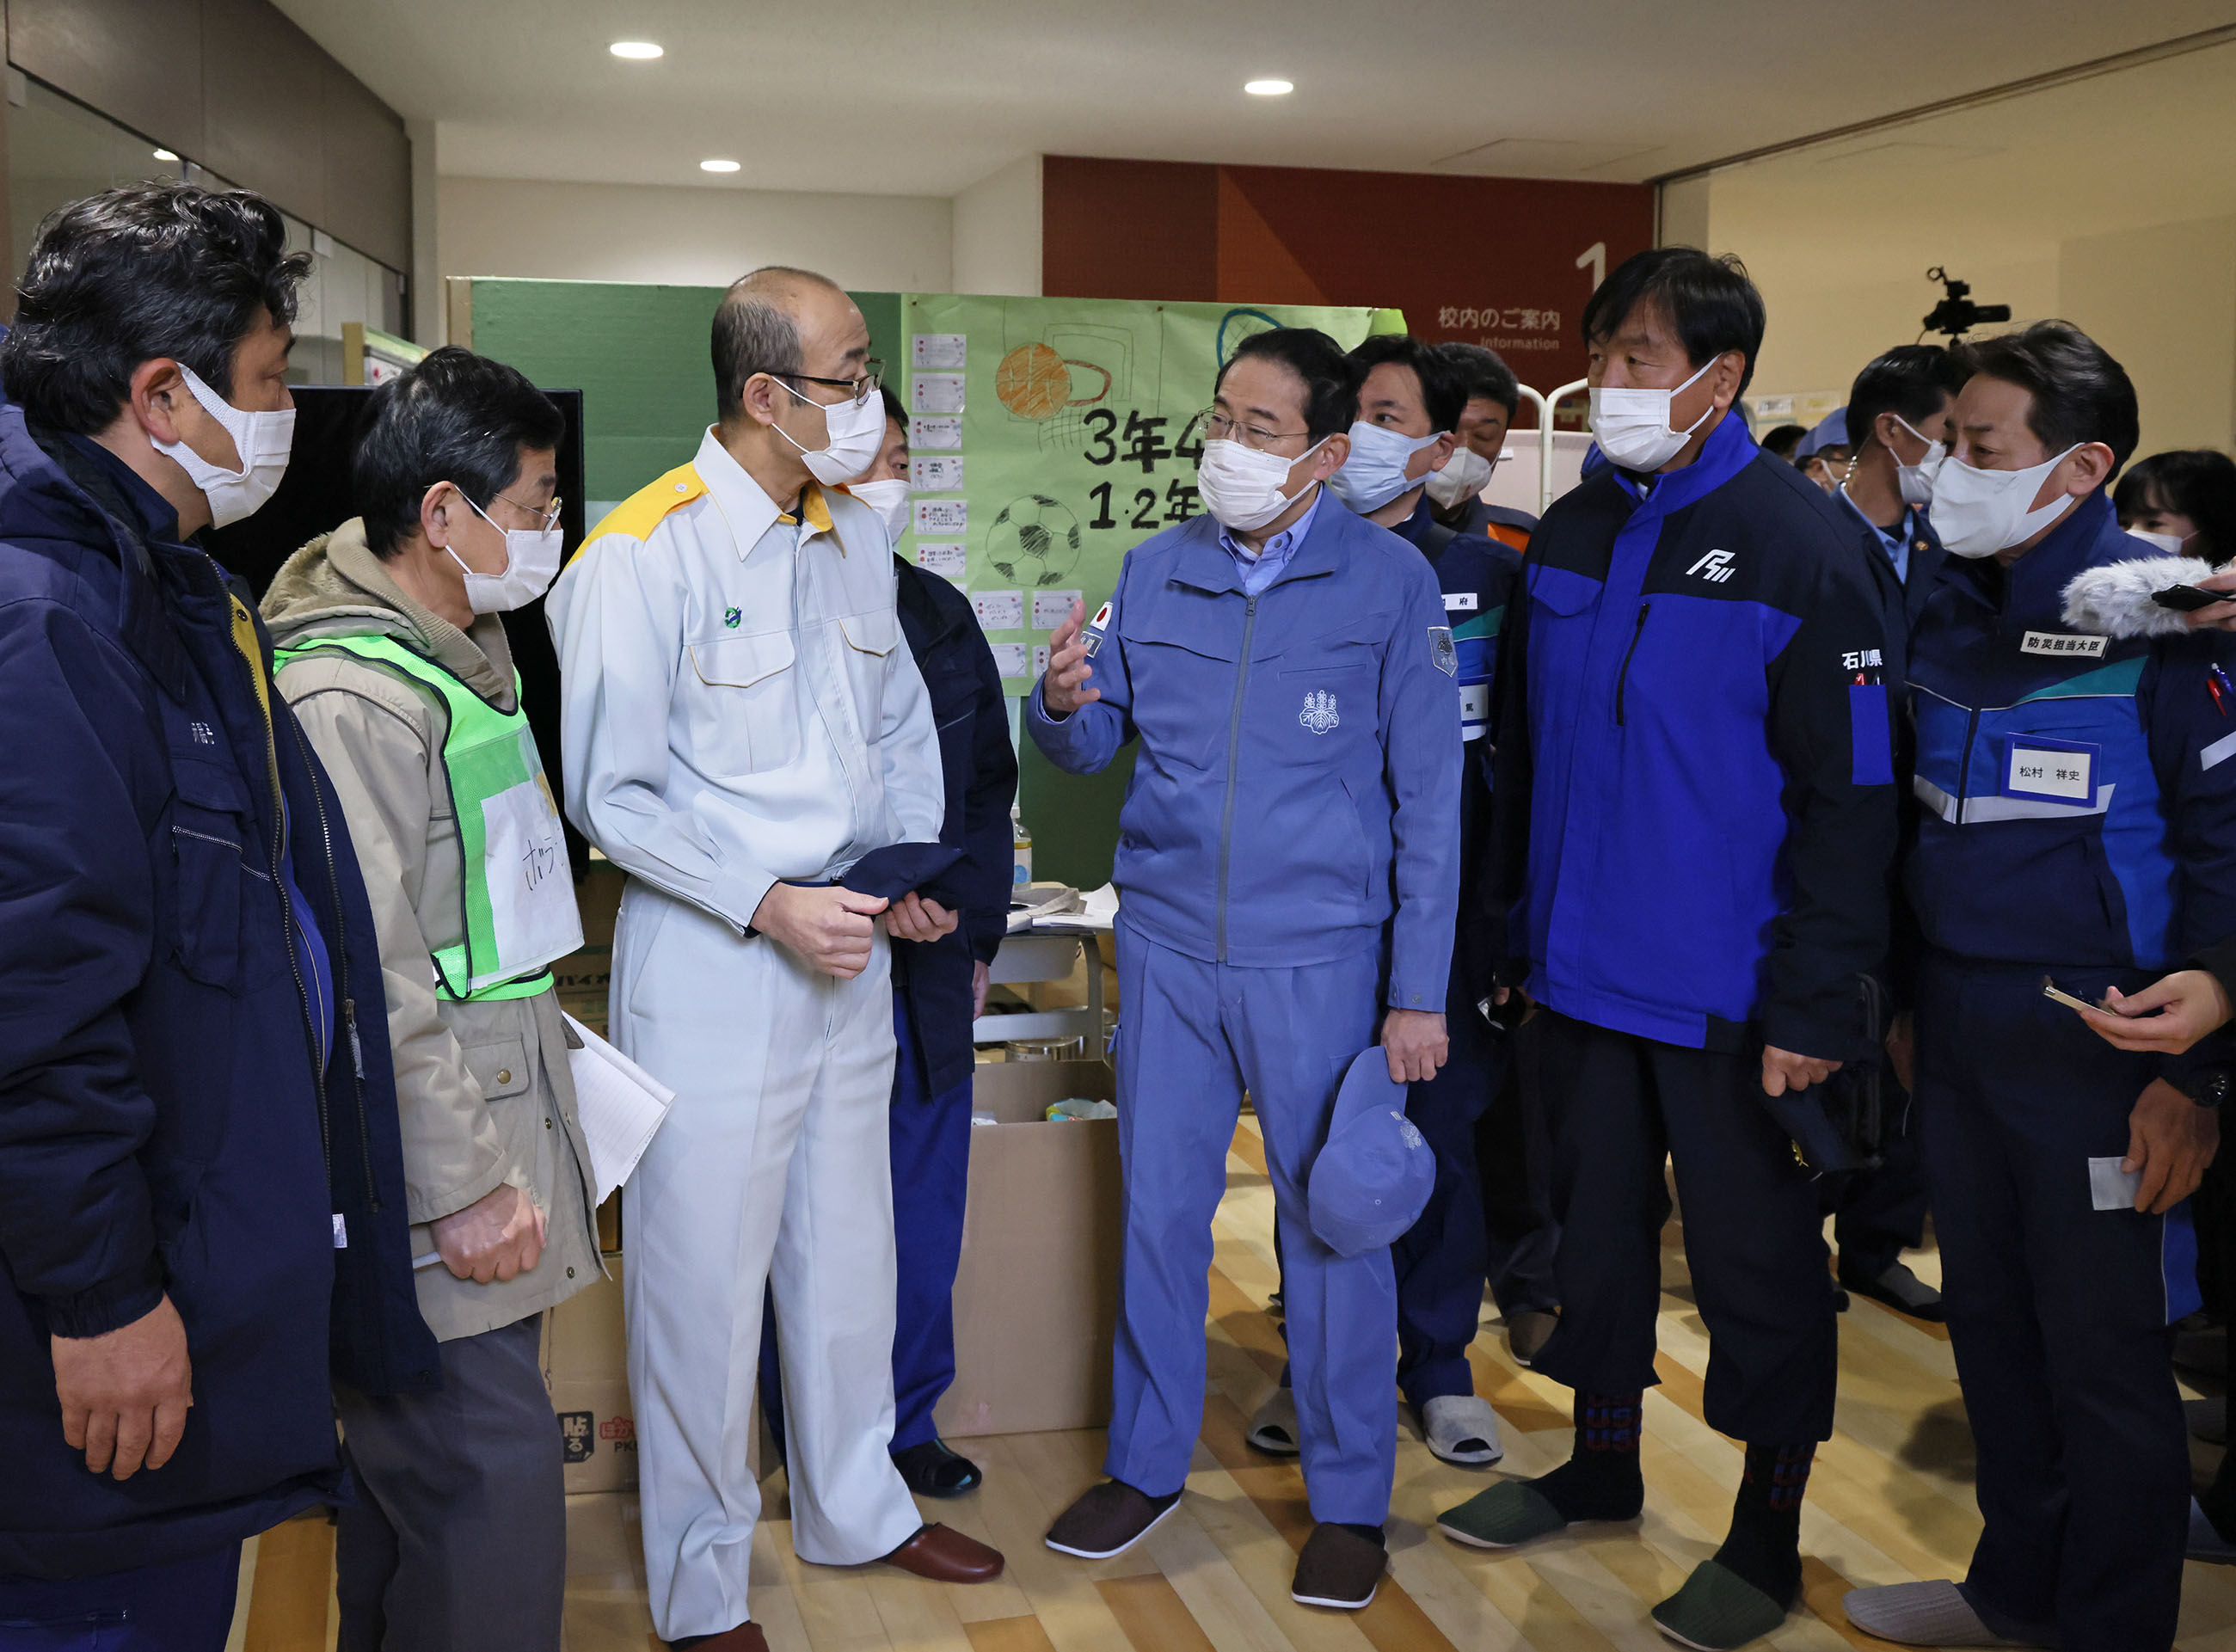 Prime Minister Kishida visiting evacuation centers (1)